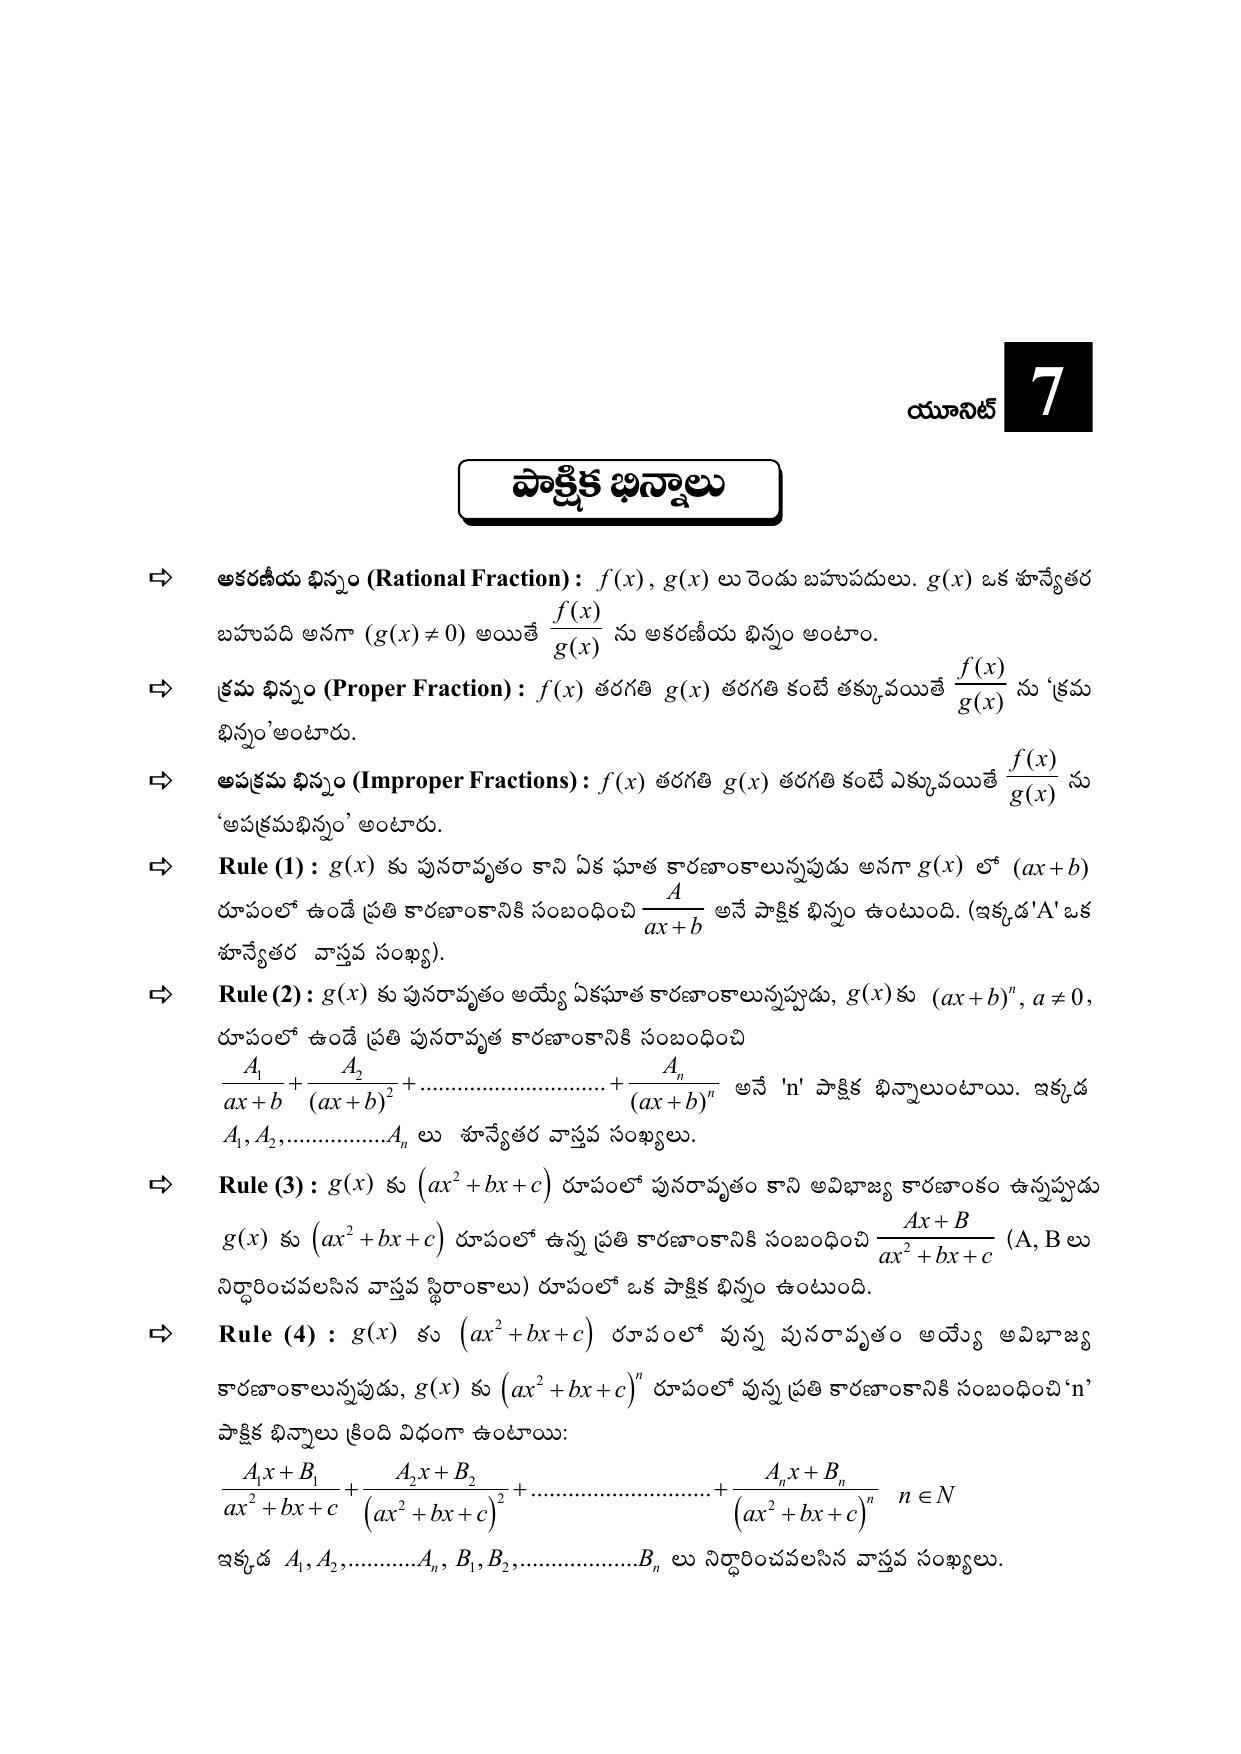 TS SCERT Inter 2nd Year Maths IIA Path 1 (Telugu Medium) Text Book - Page 77